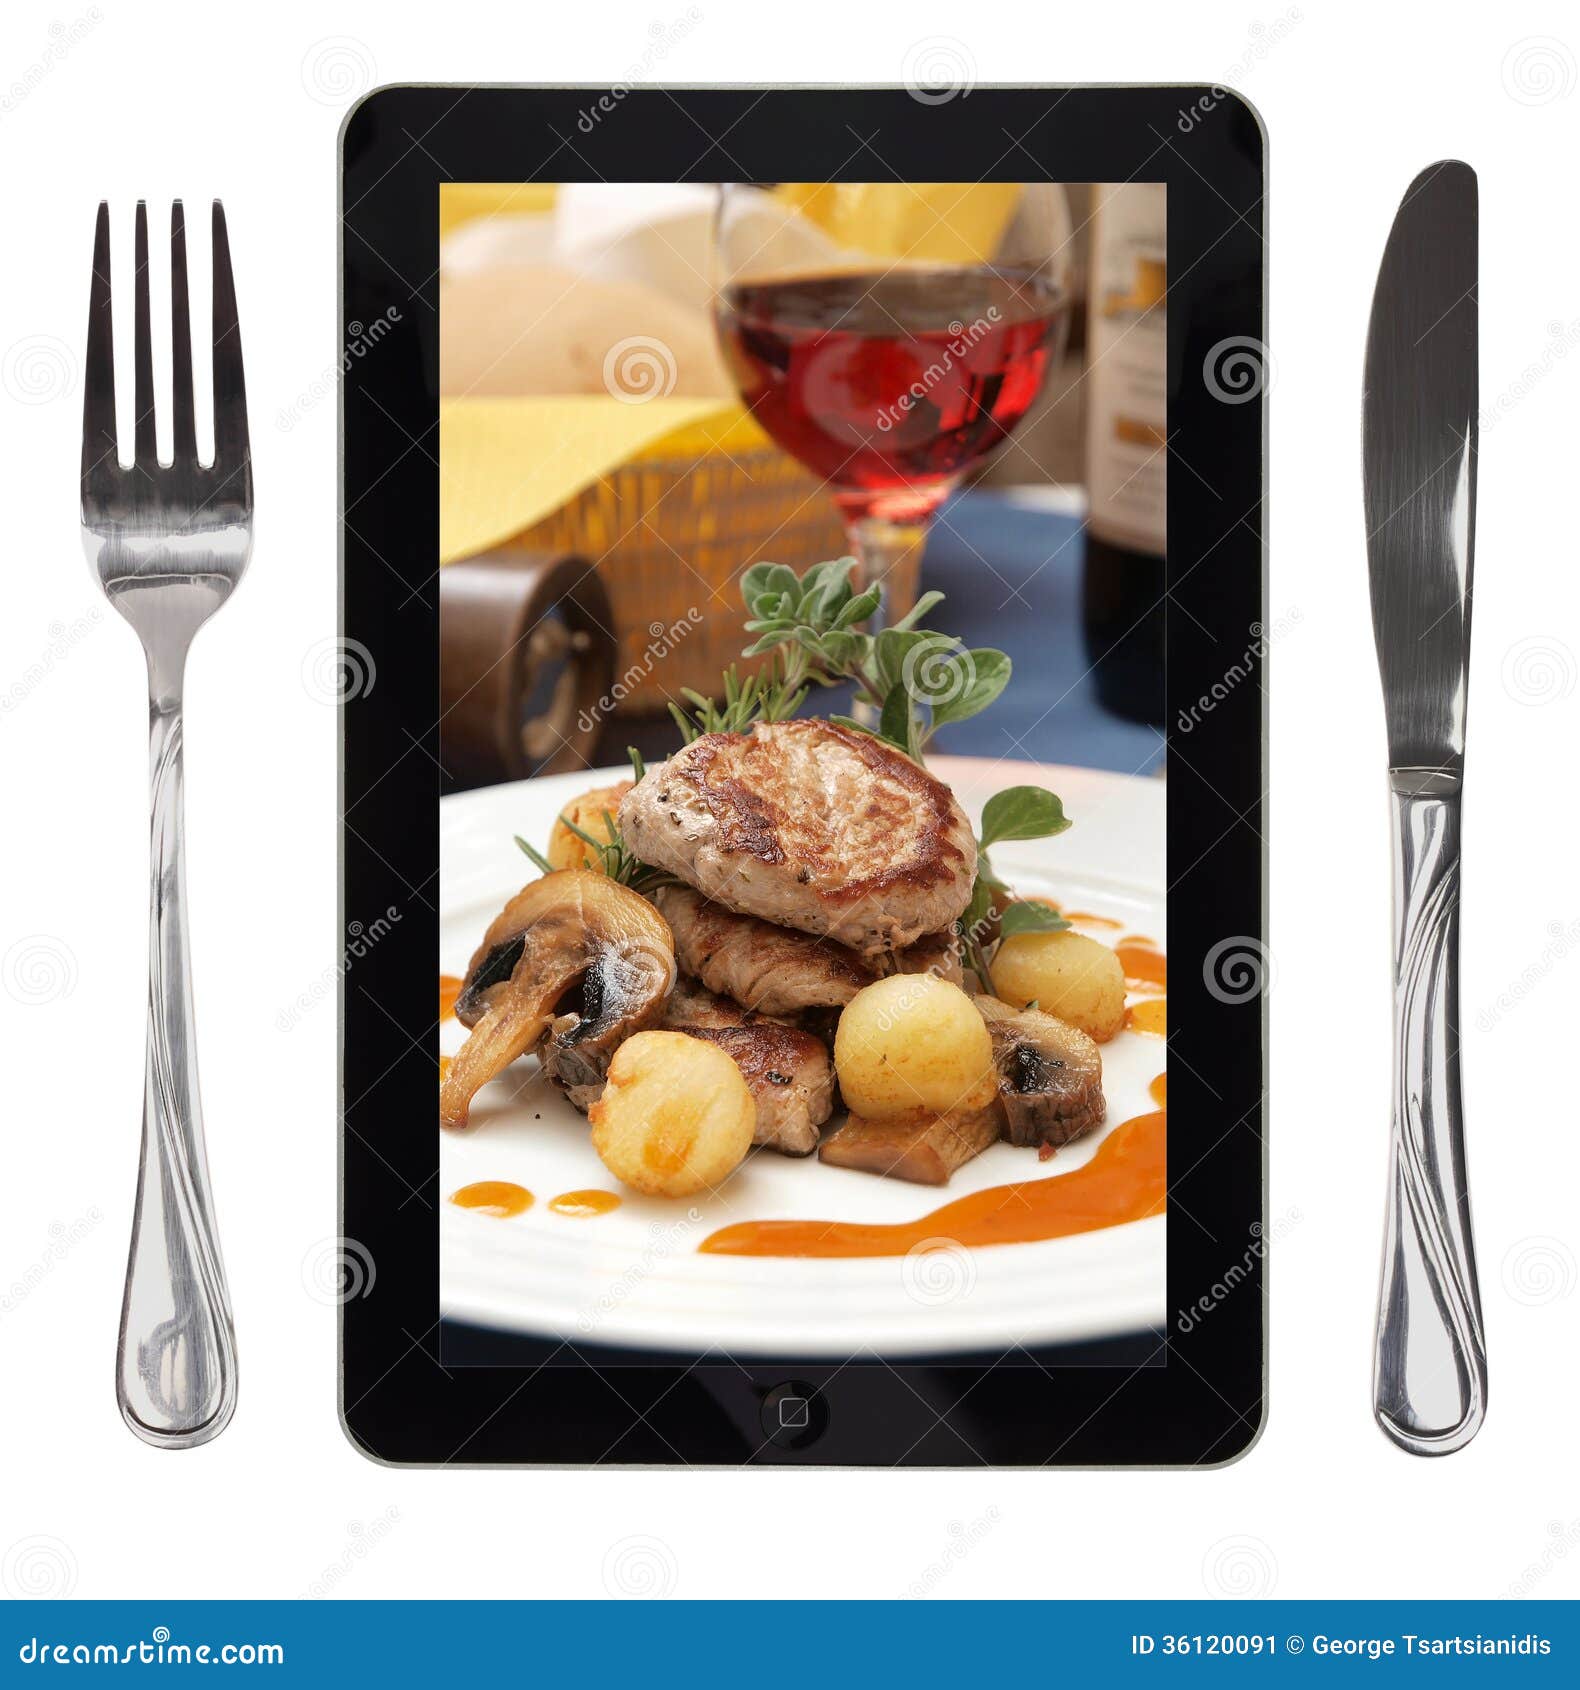 tablet-food-photo-fork-knife-conceptual-